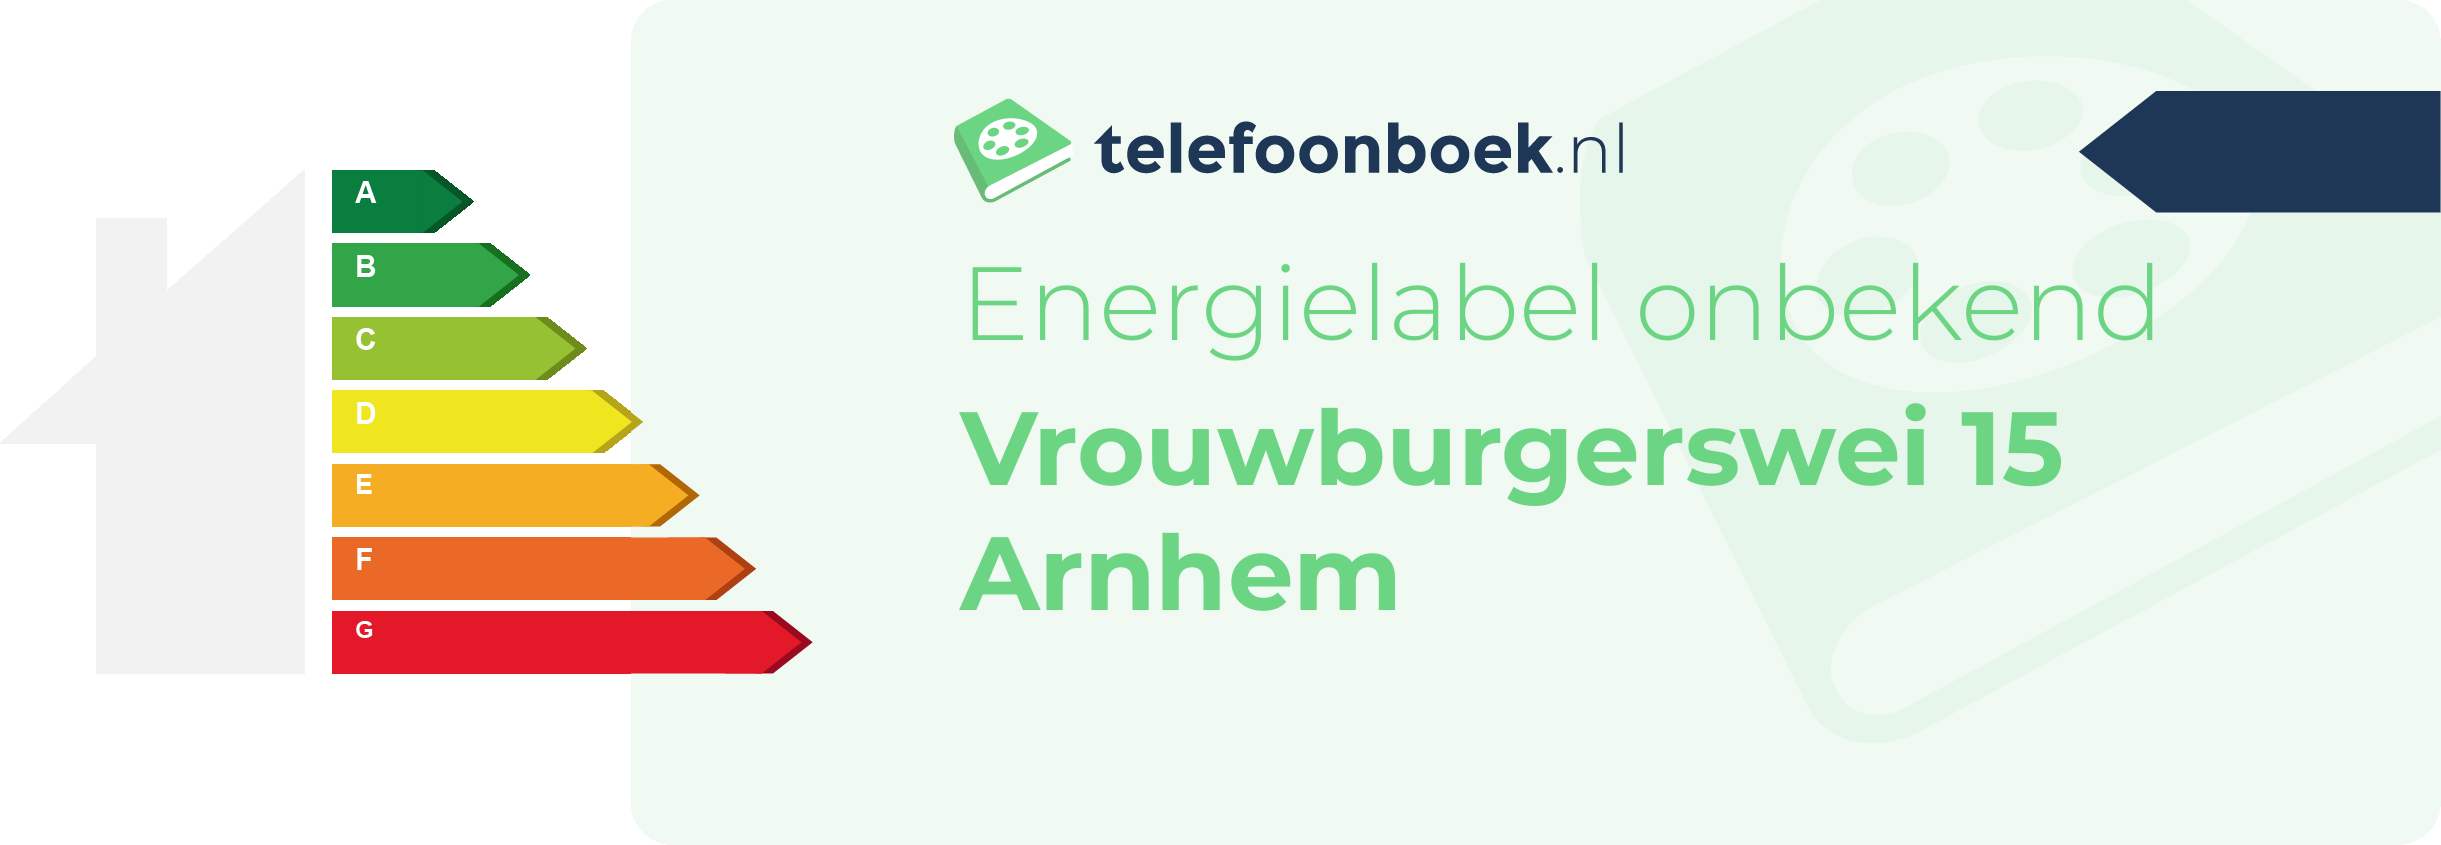 Energielabel Vrouwburgerswei 15 Arnhem